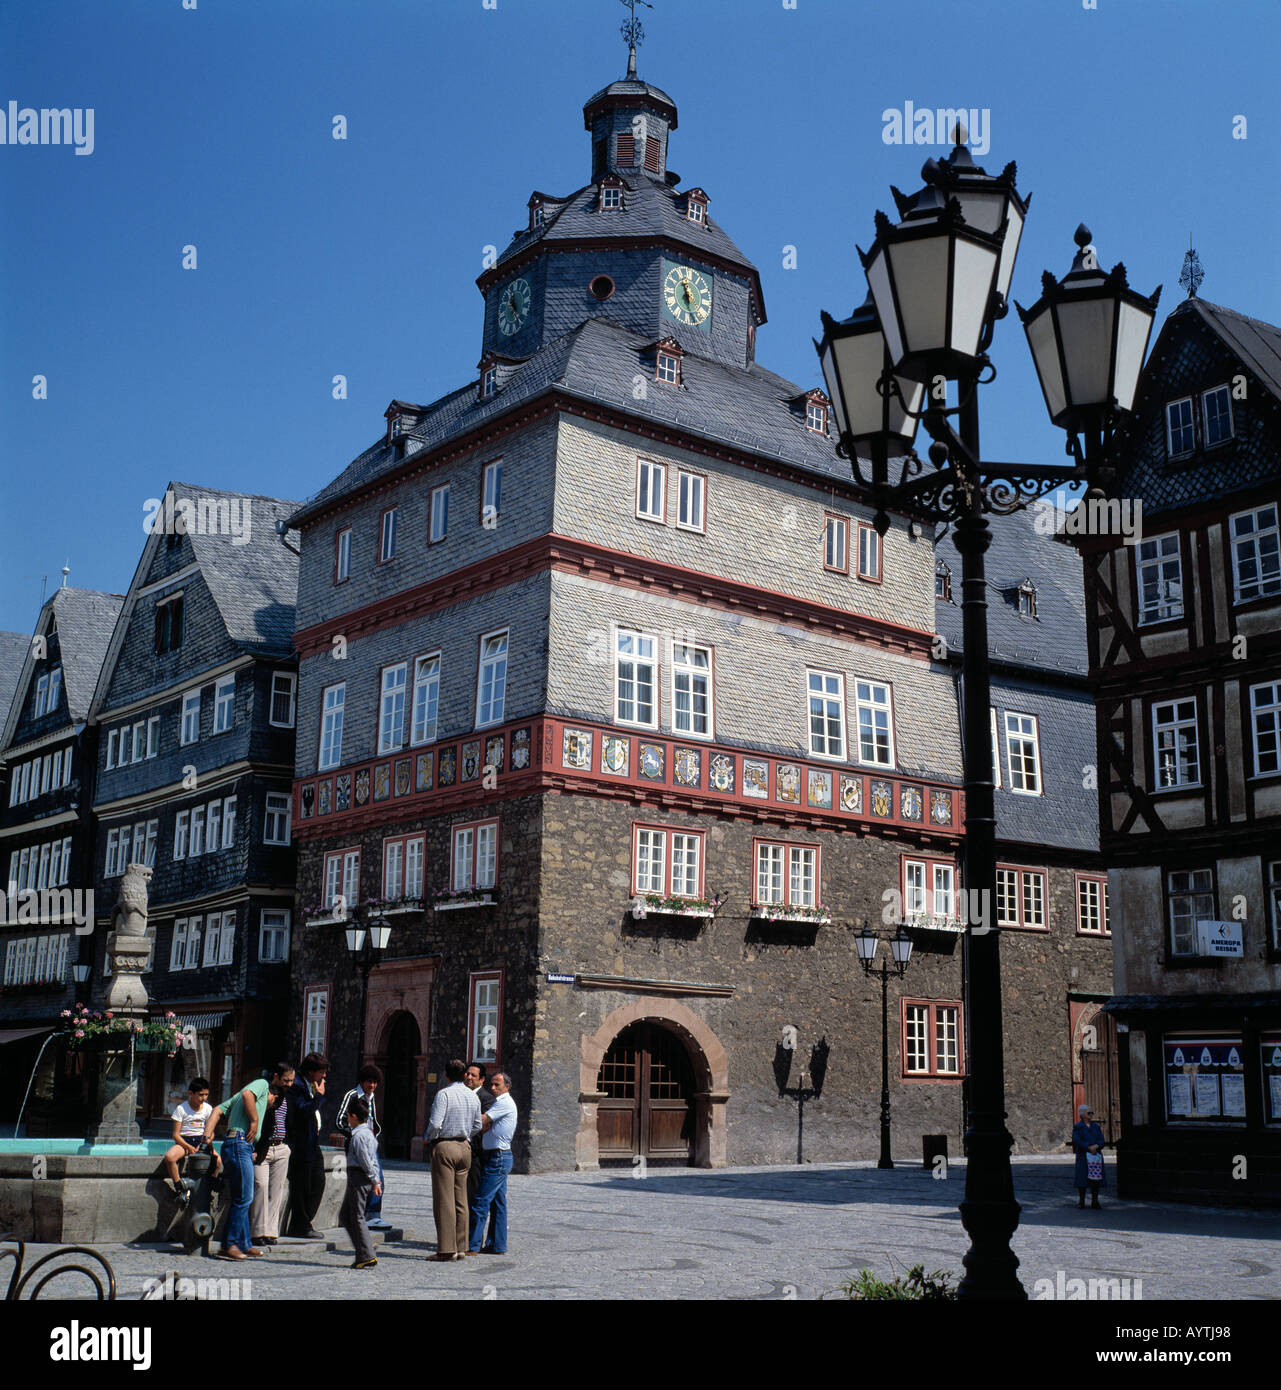 Renaissancerathaus am Marktplatz in Herborn, Dill, Aar, Donsbach, Hessen Stock Photo